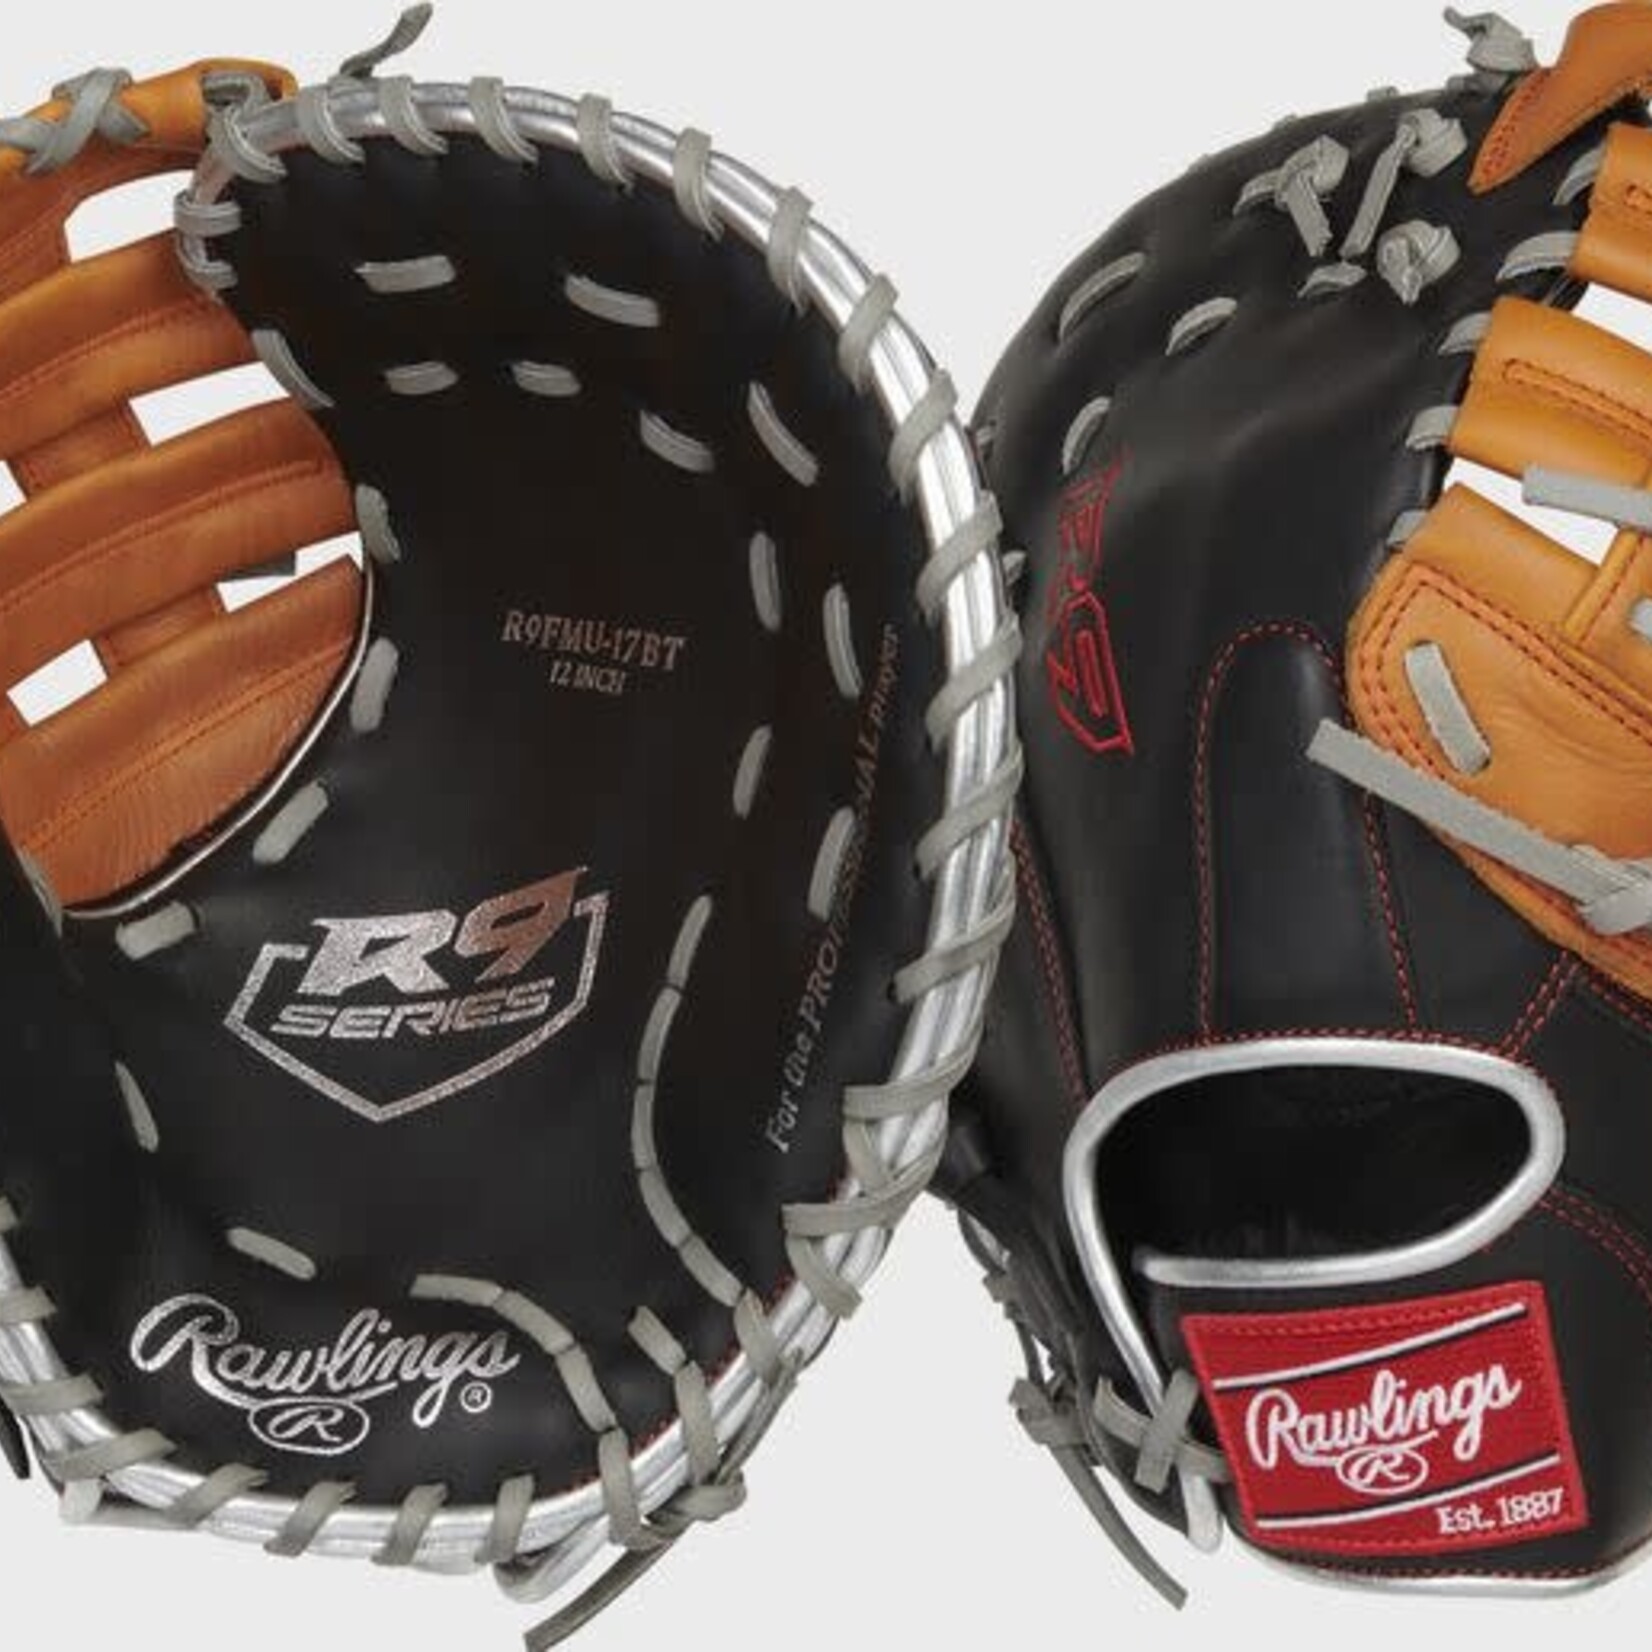 Rawlings Rawlings Baseball Glove, R9 Contour Series, R9FMU-17BT, 12”, Reg, Youth, First Base Mitt